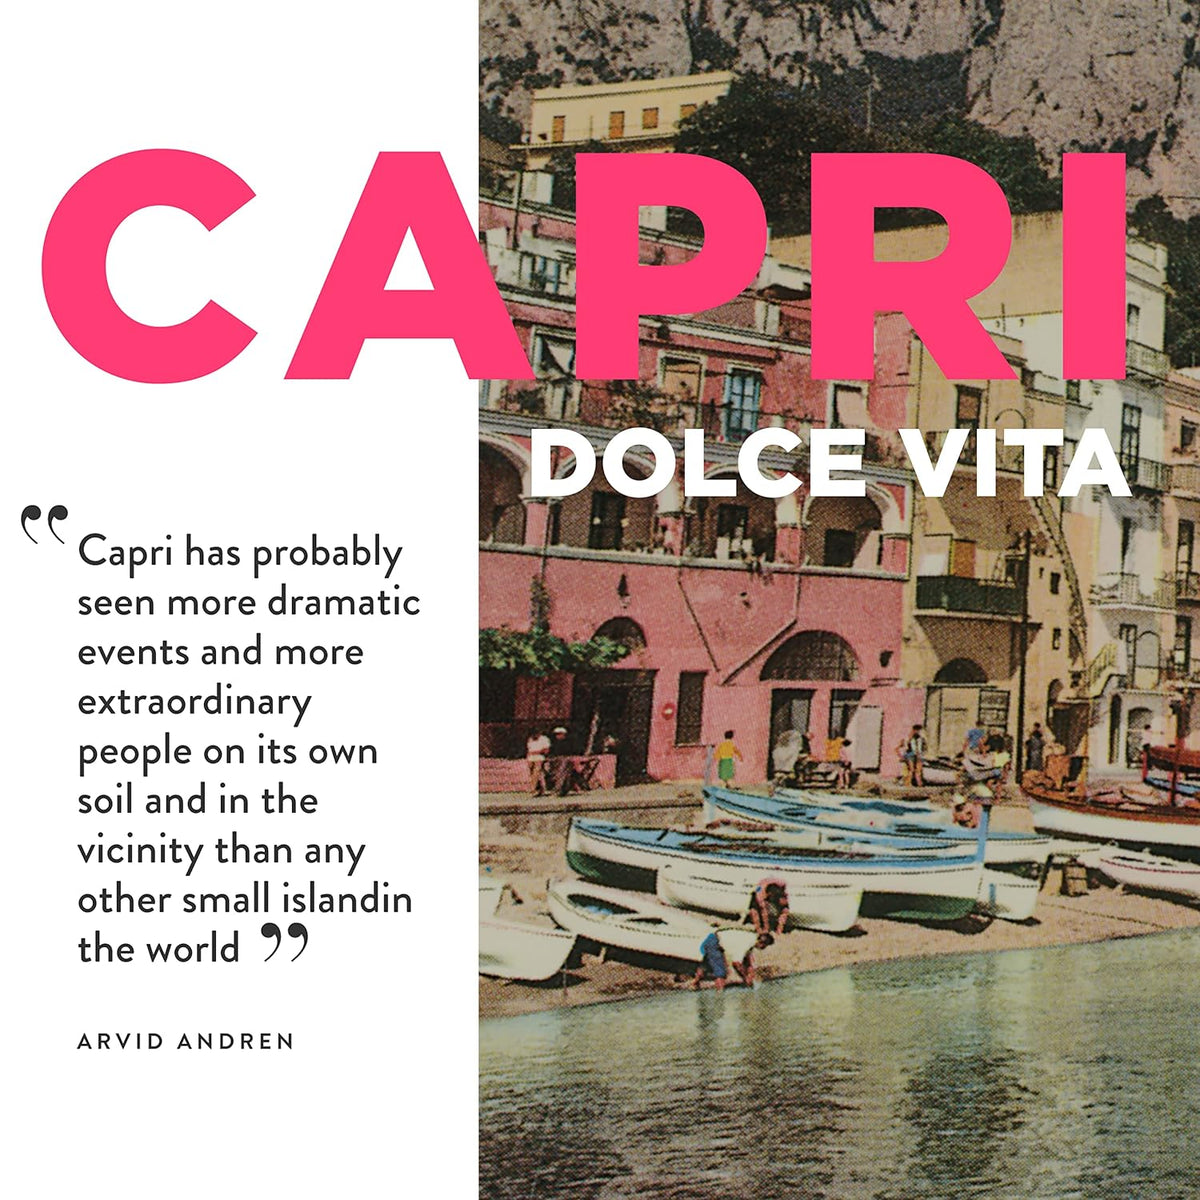 Capri Dolce Vita- Assouline coffee table book